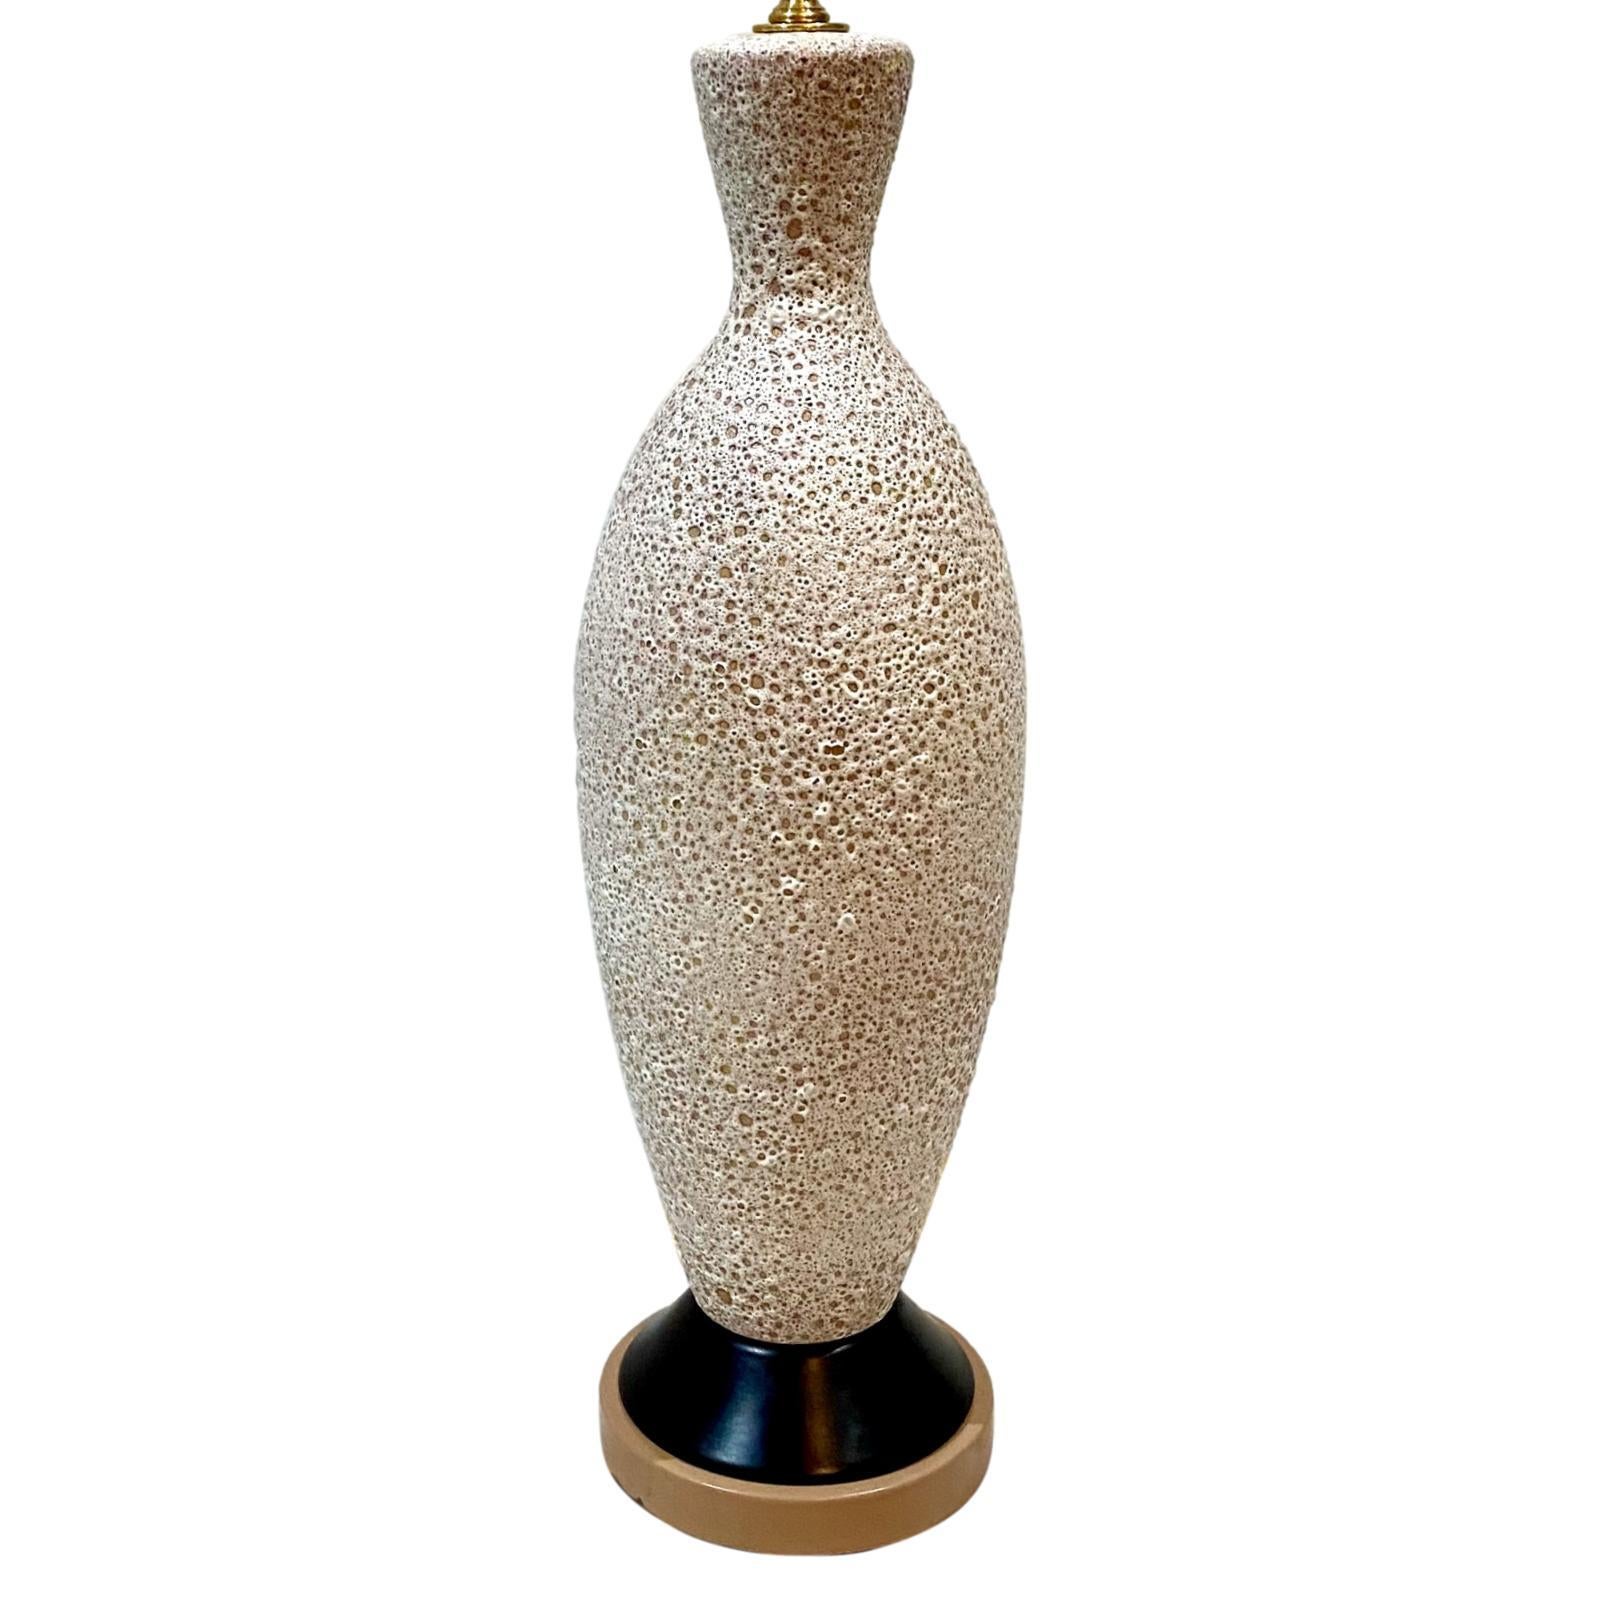 A single circa 1950's Italian textured glaze ceramic table lamp.

Measurements:
Height of body: 22.5